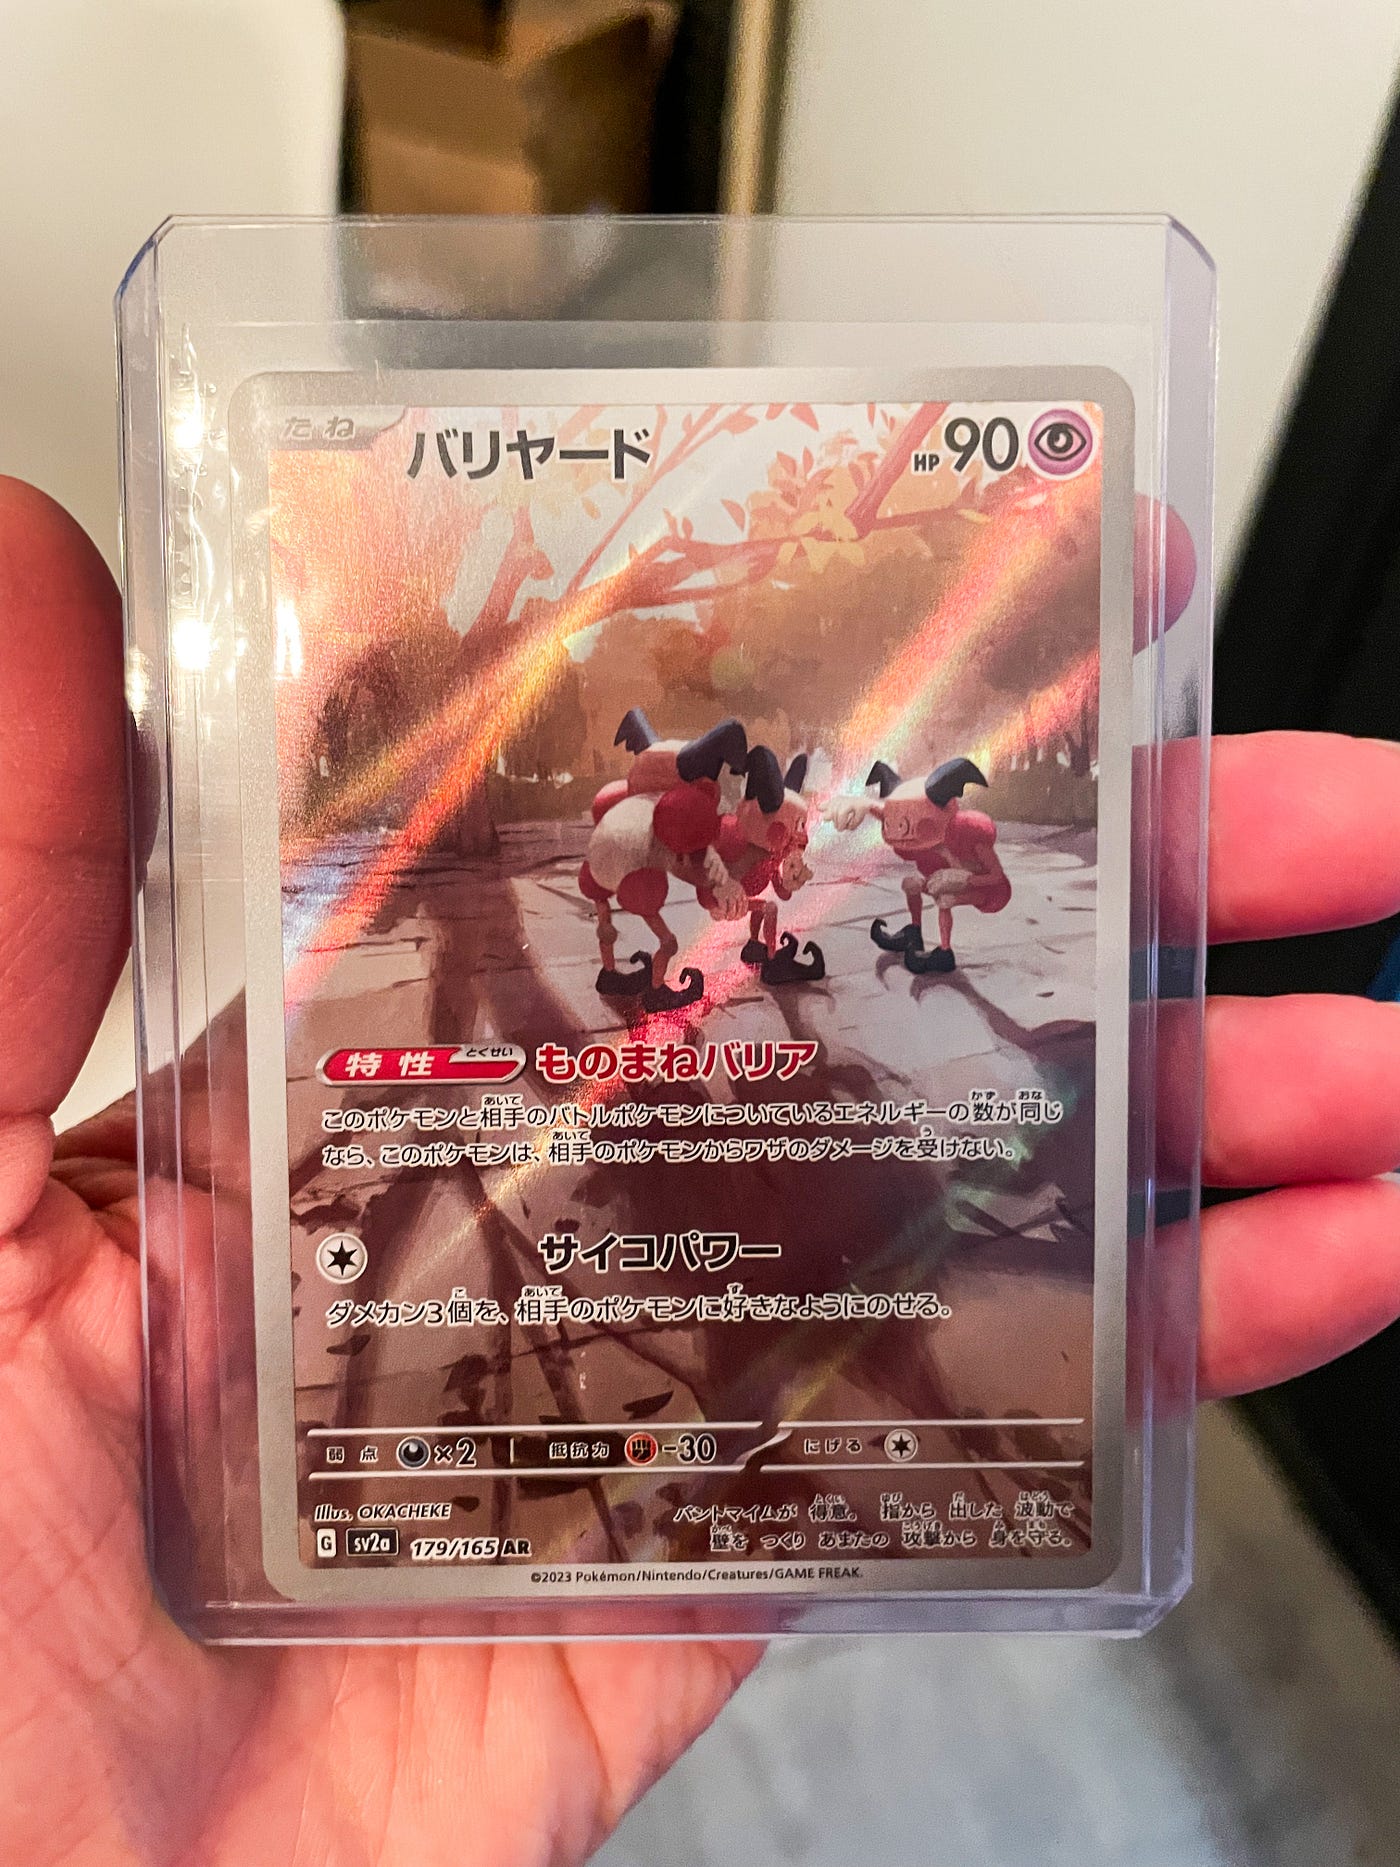 Ditto 132/165 Reverse Holo Pokemon Card Japanese Pokemon Card 151